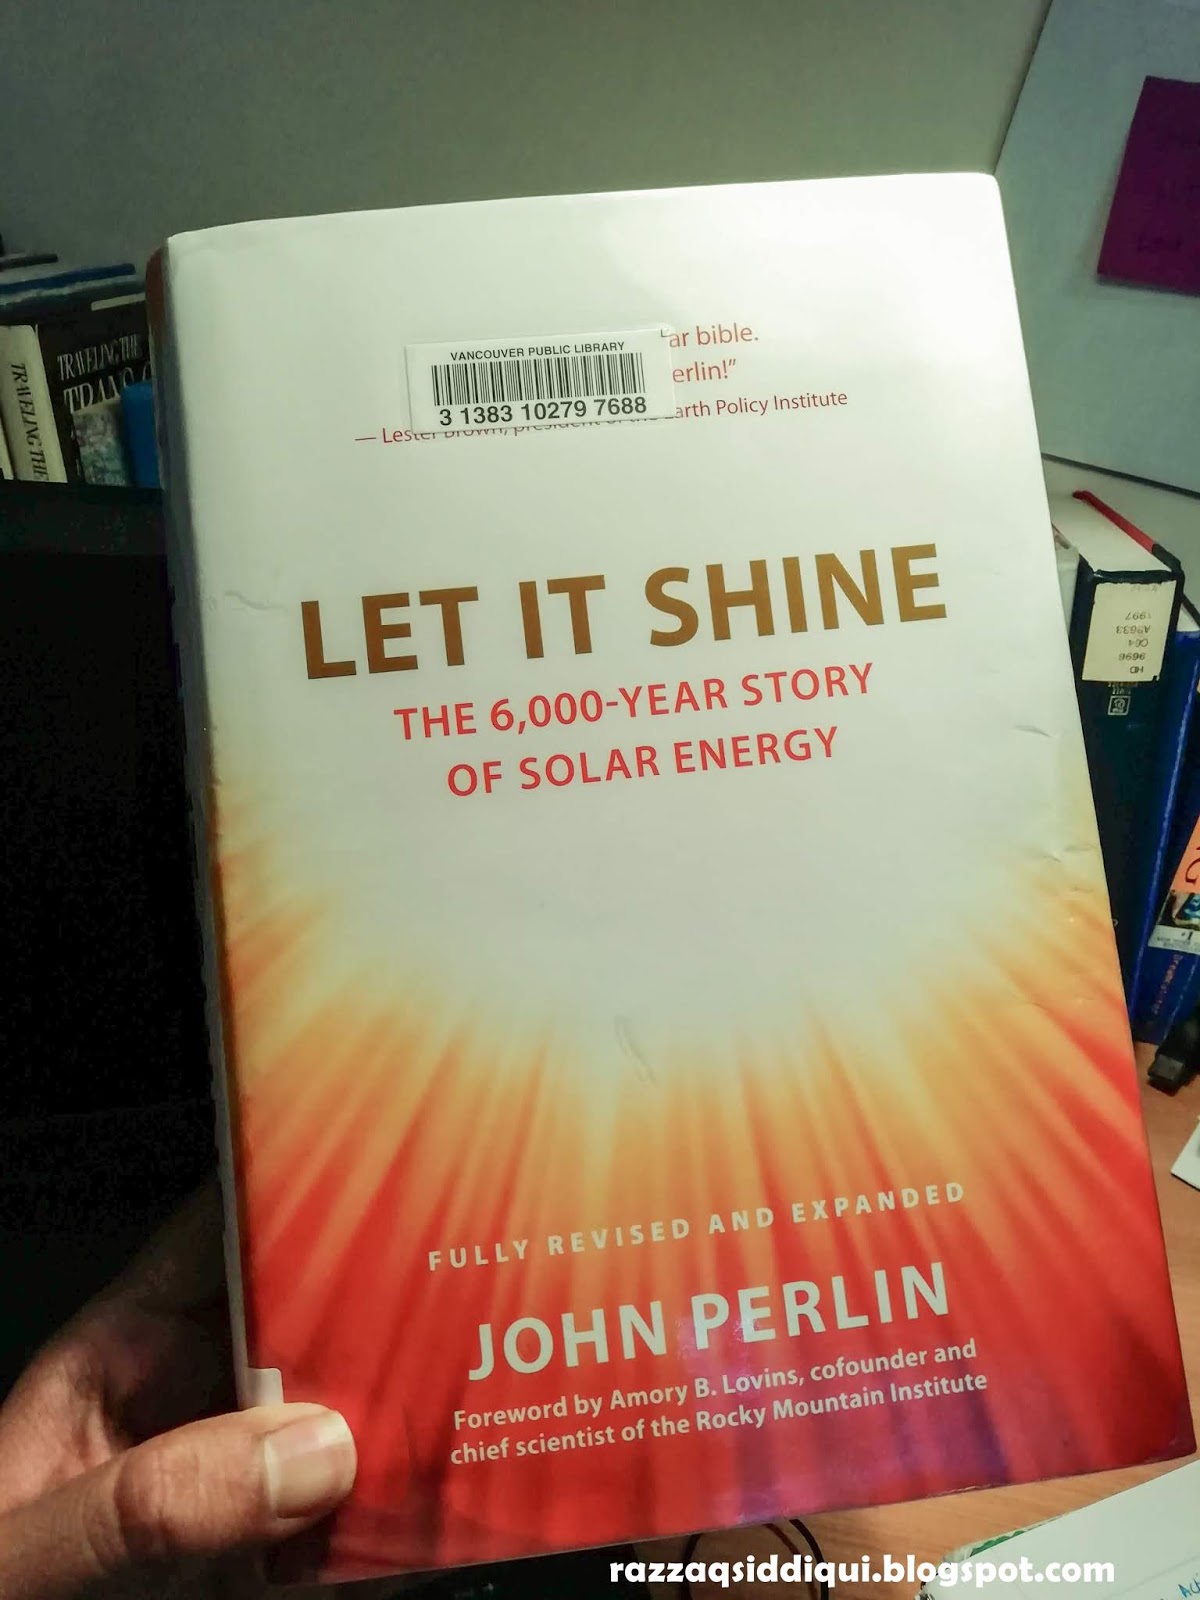 Book Post 6: “Let it Shine” by John Perlin